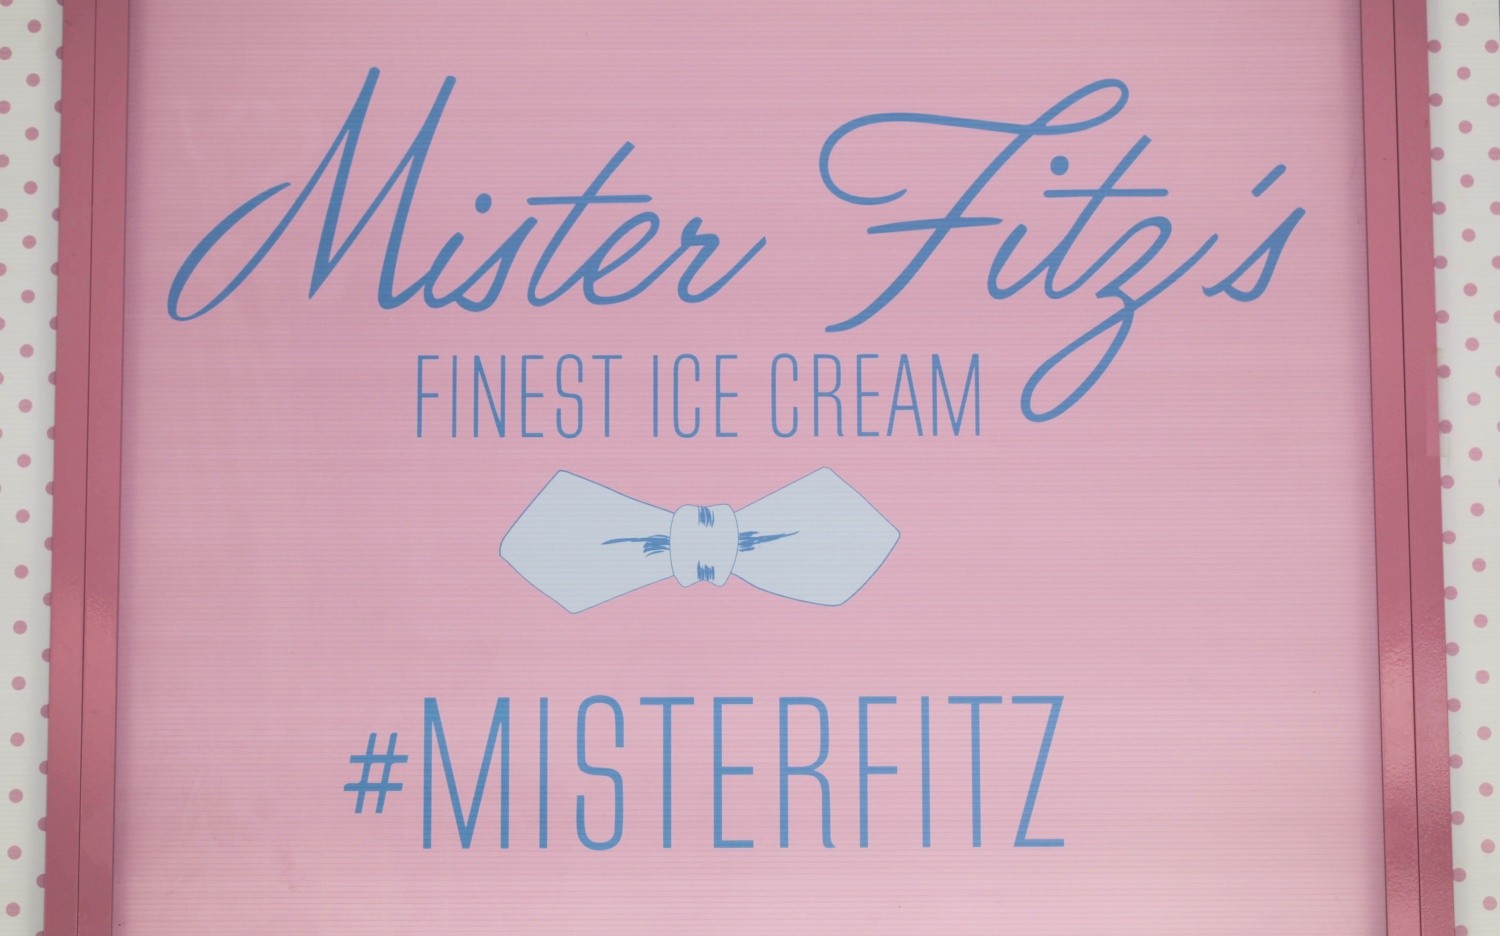 Mister Fitz’s Finest Ice Cream